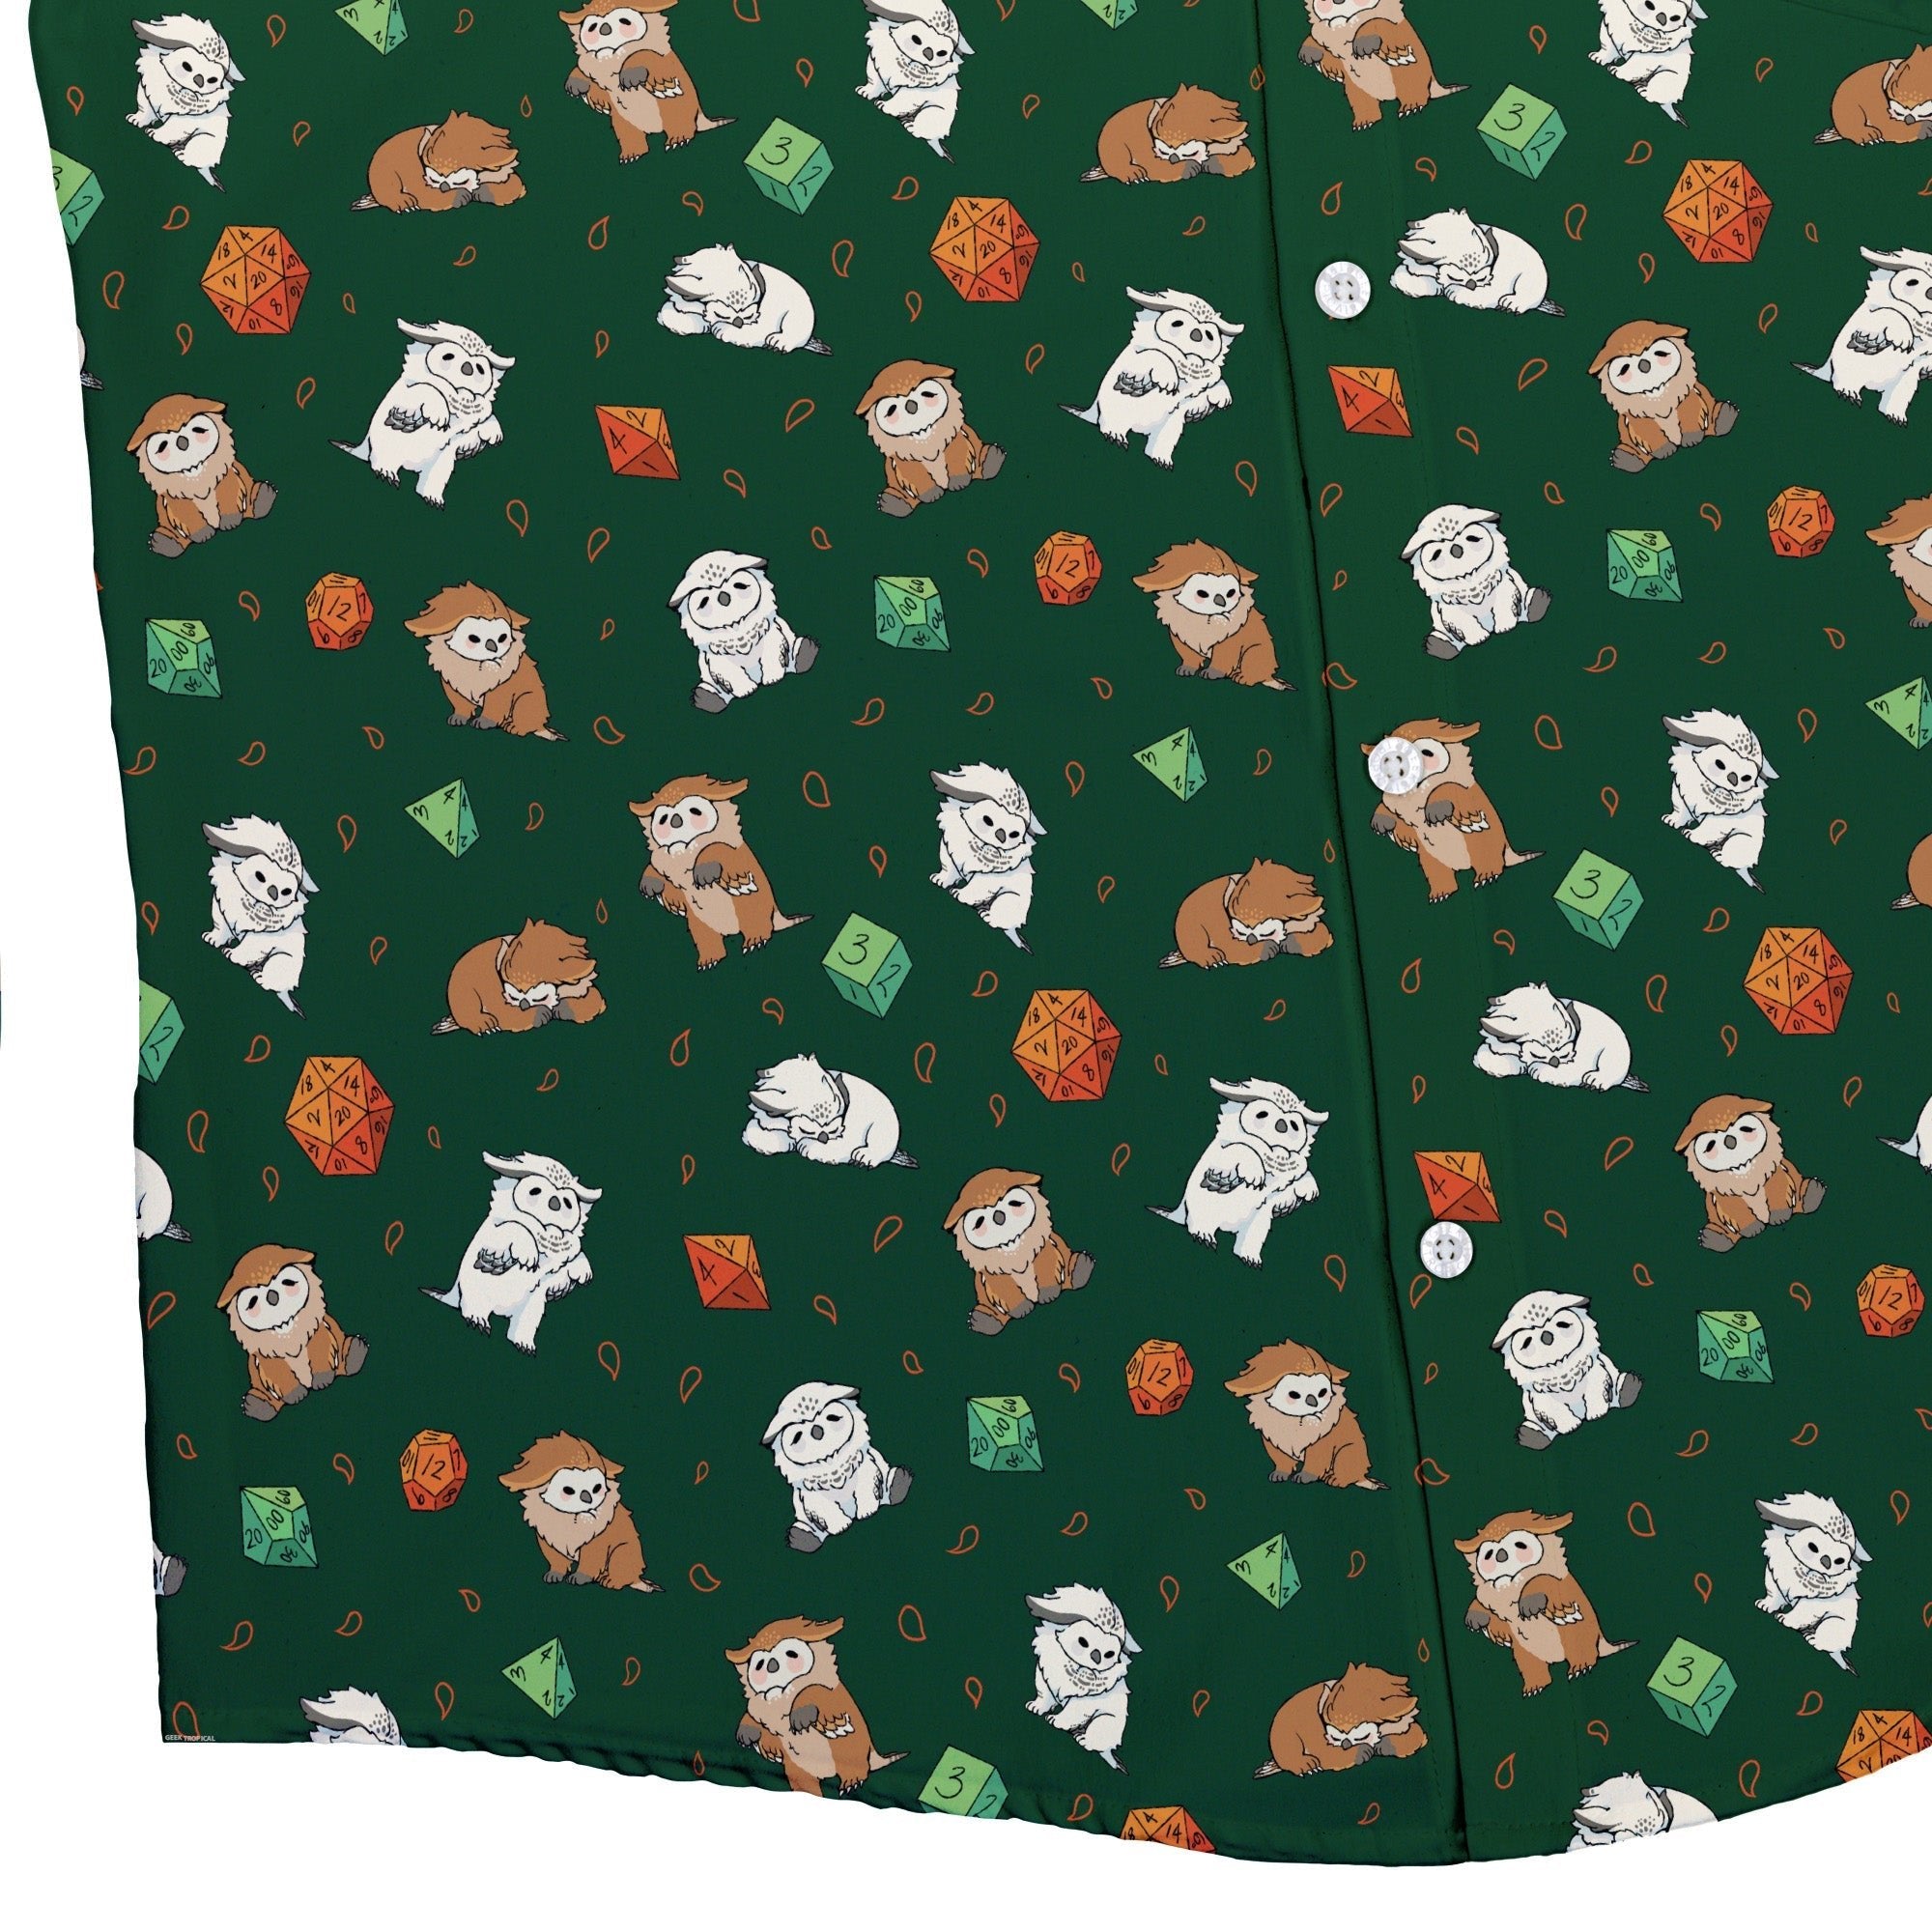 Dnd Owlbears Button Up Shirt - adult sizing - Design by Ardi Tong - dnd & rpg print